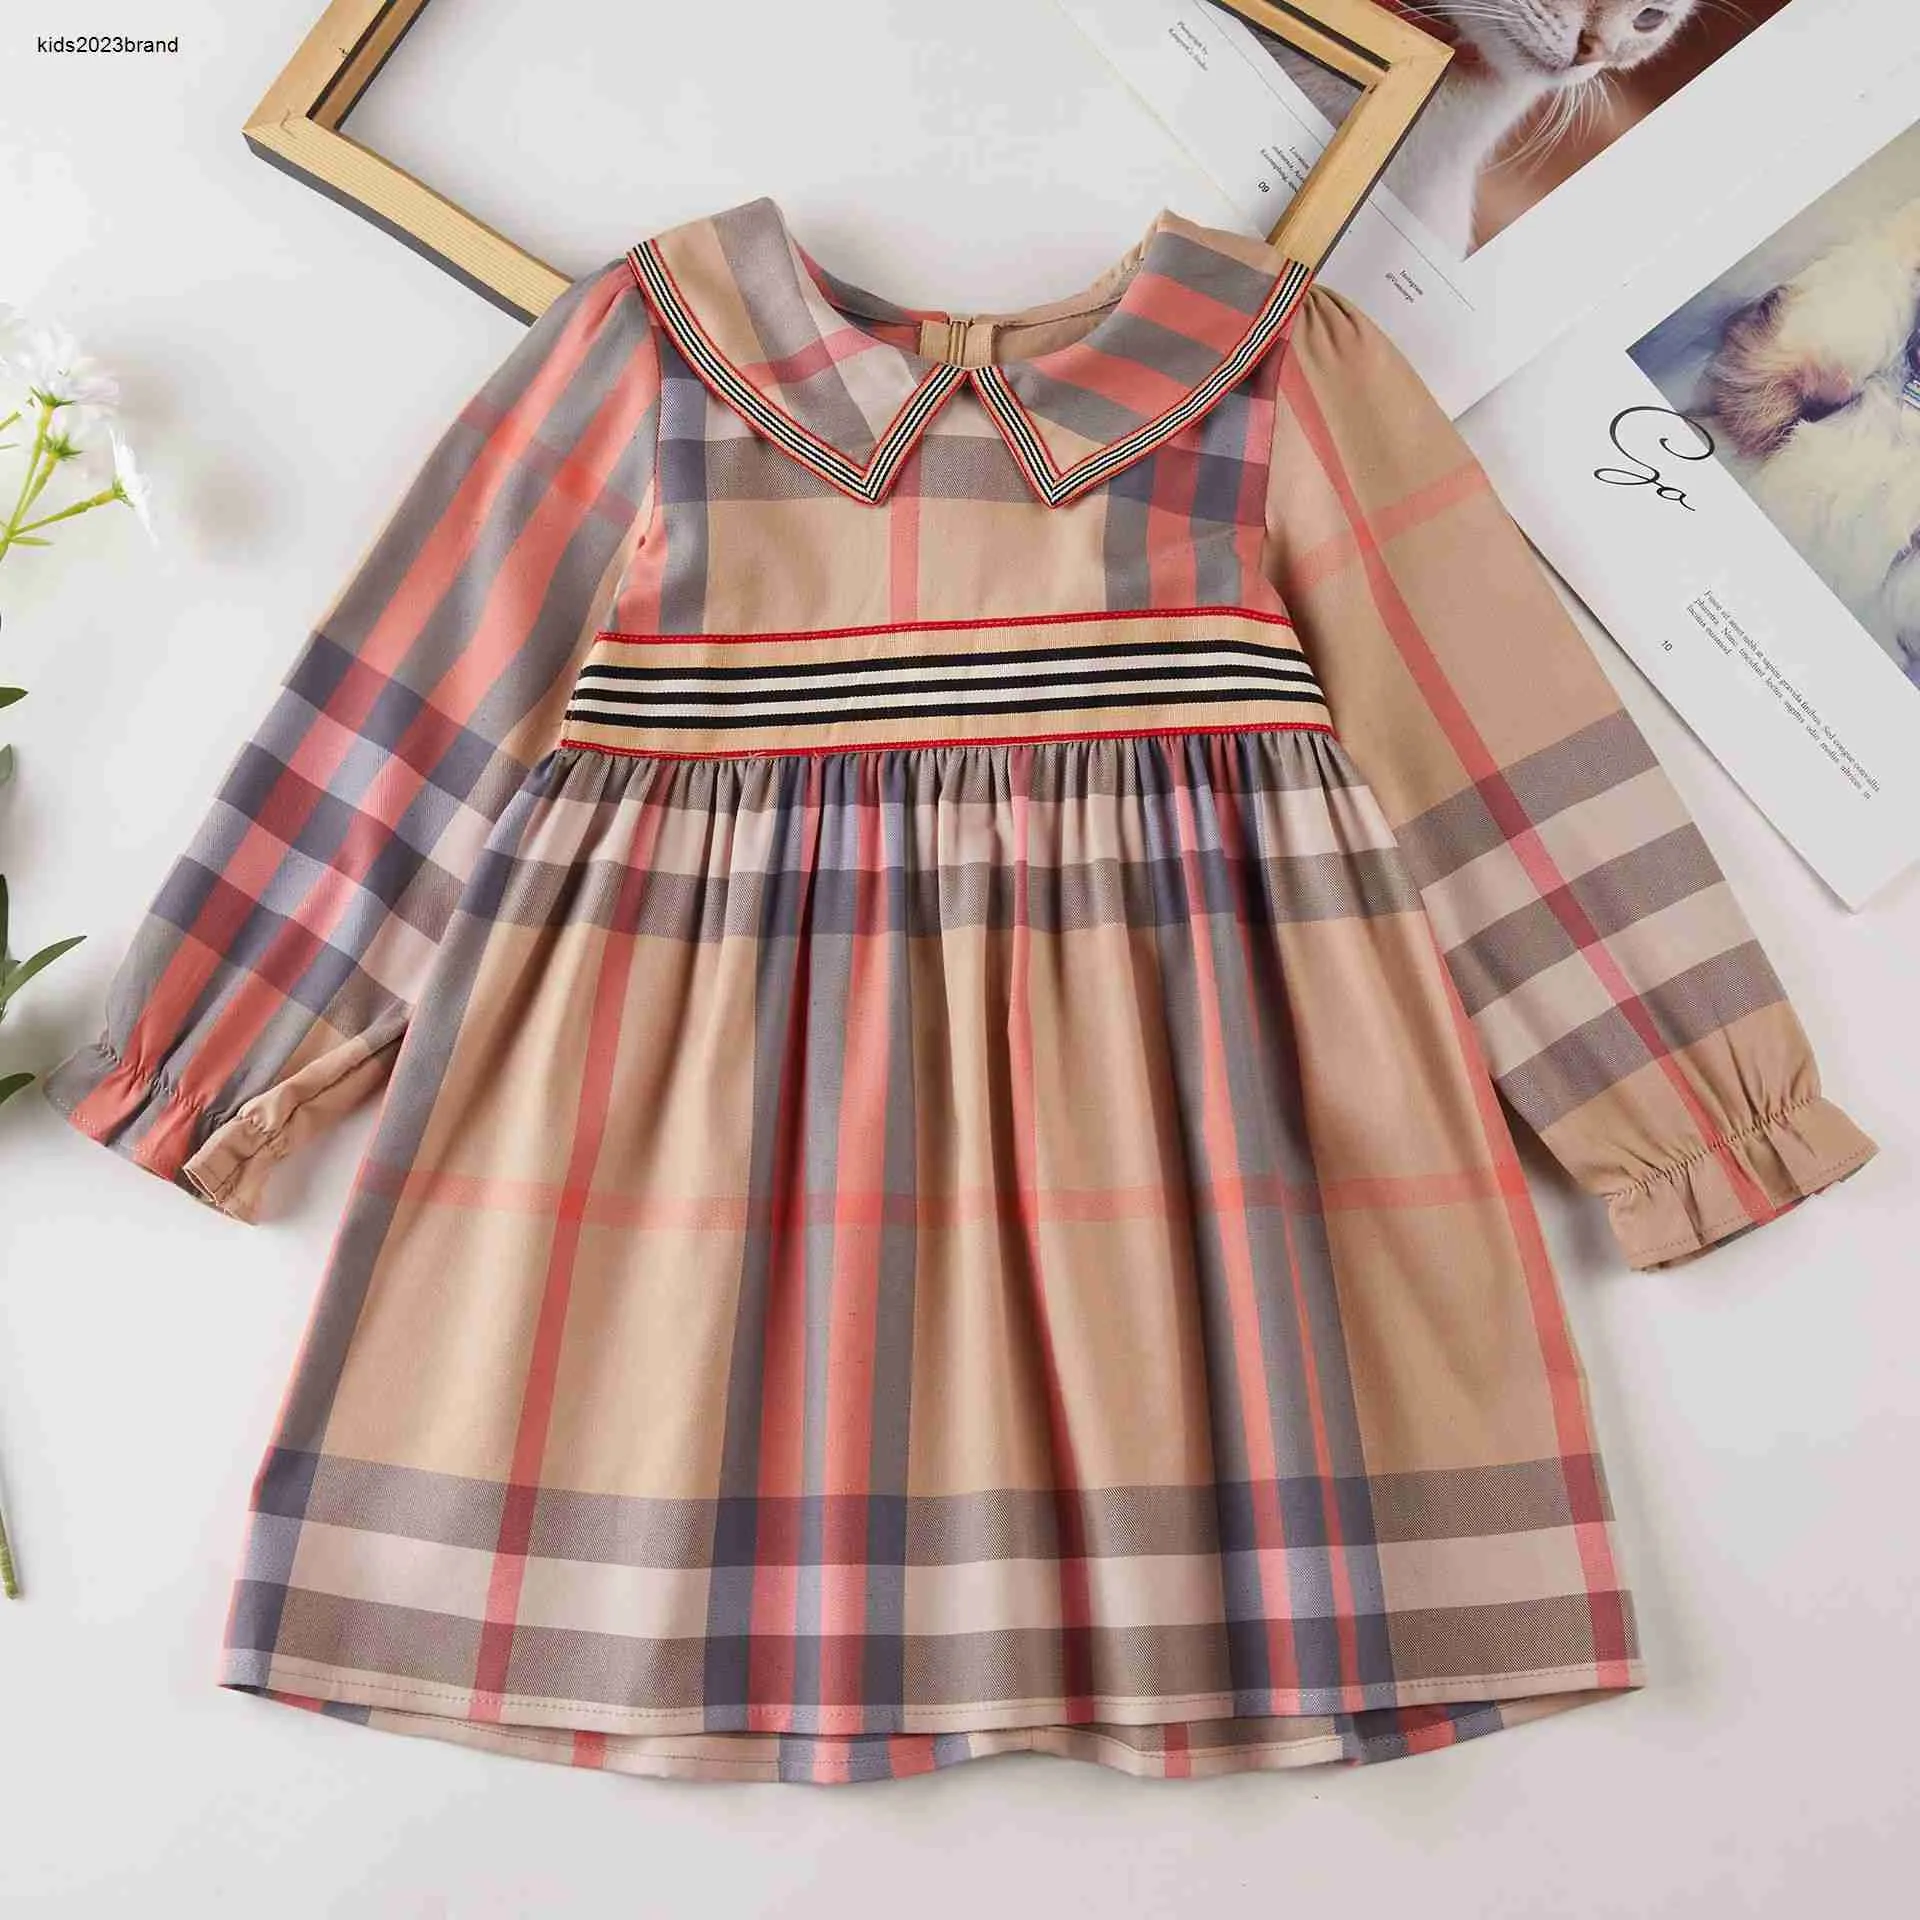 New baby dress minimal design girl dresses kids designer clothes Size 100-130 Long sleeved child skirt toddler frock Dec05